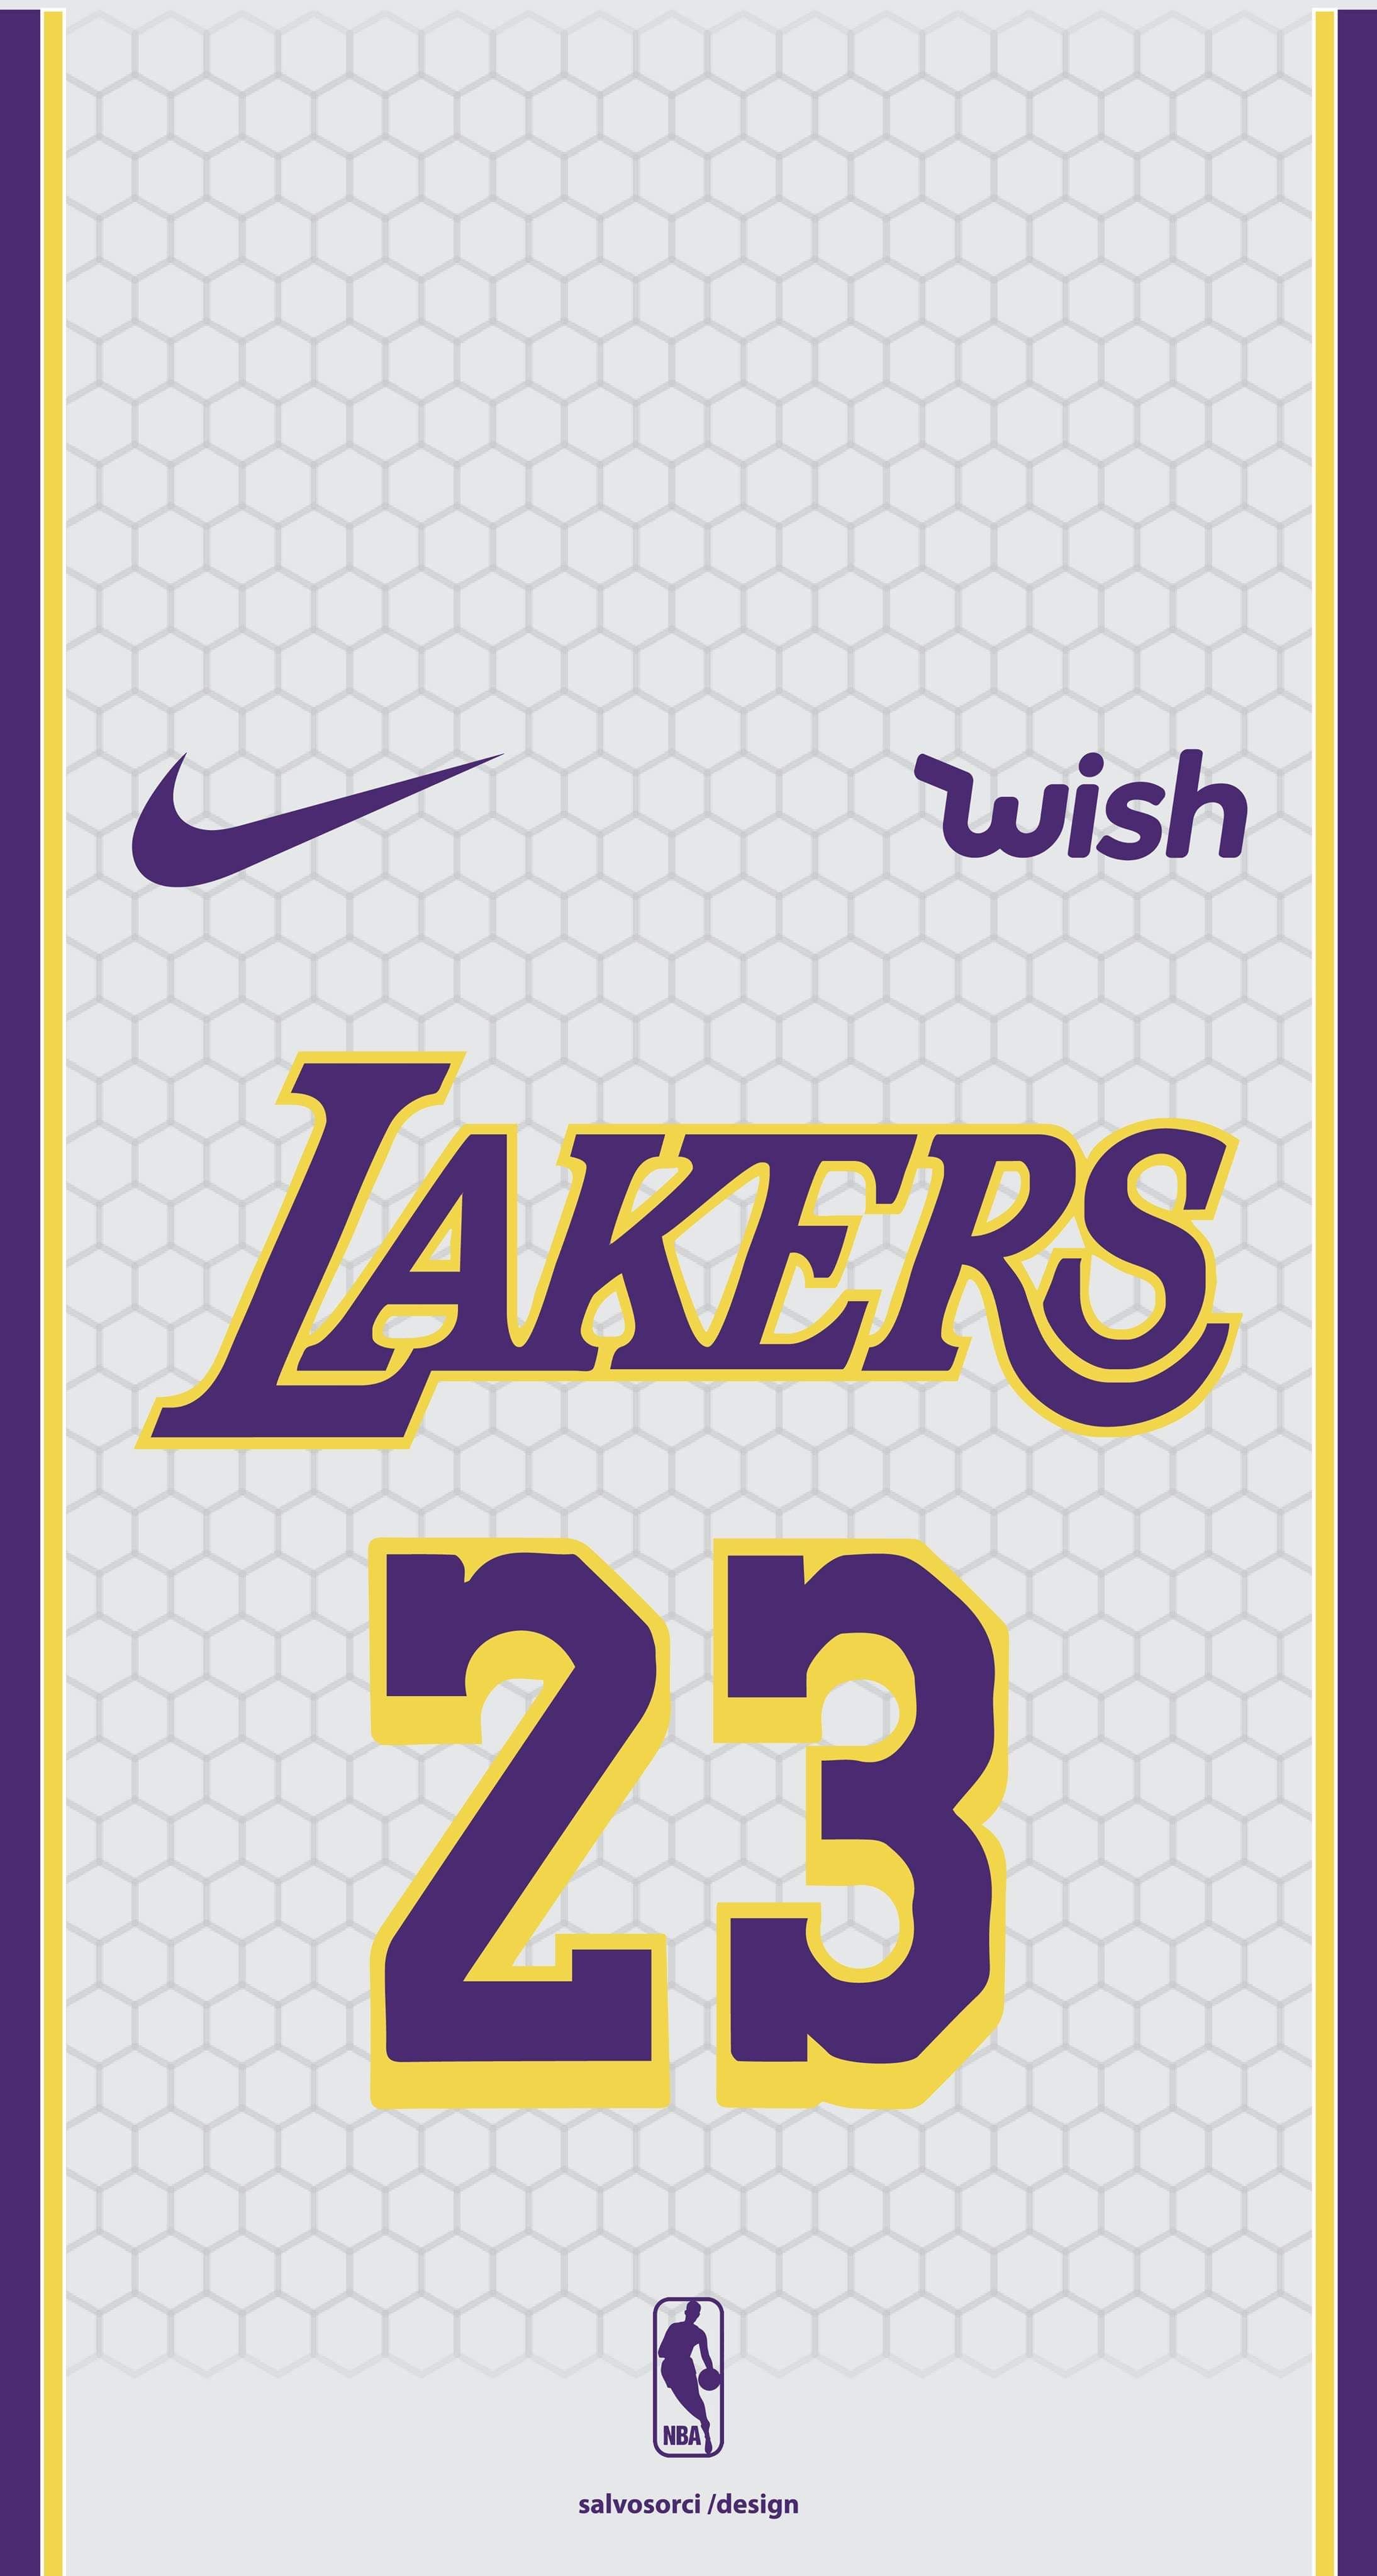 Lakers ideas. lakers, lakers wallpaper, lebron james lakers